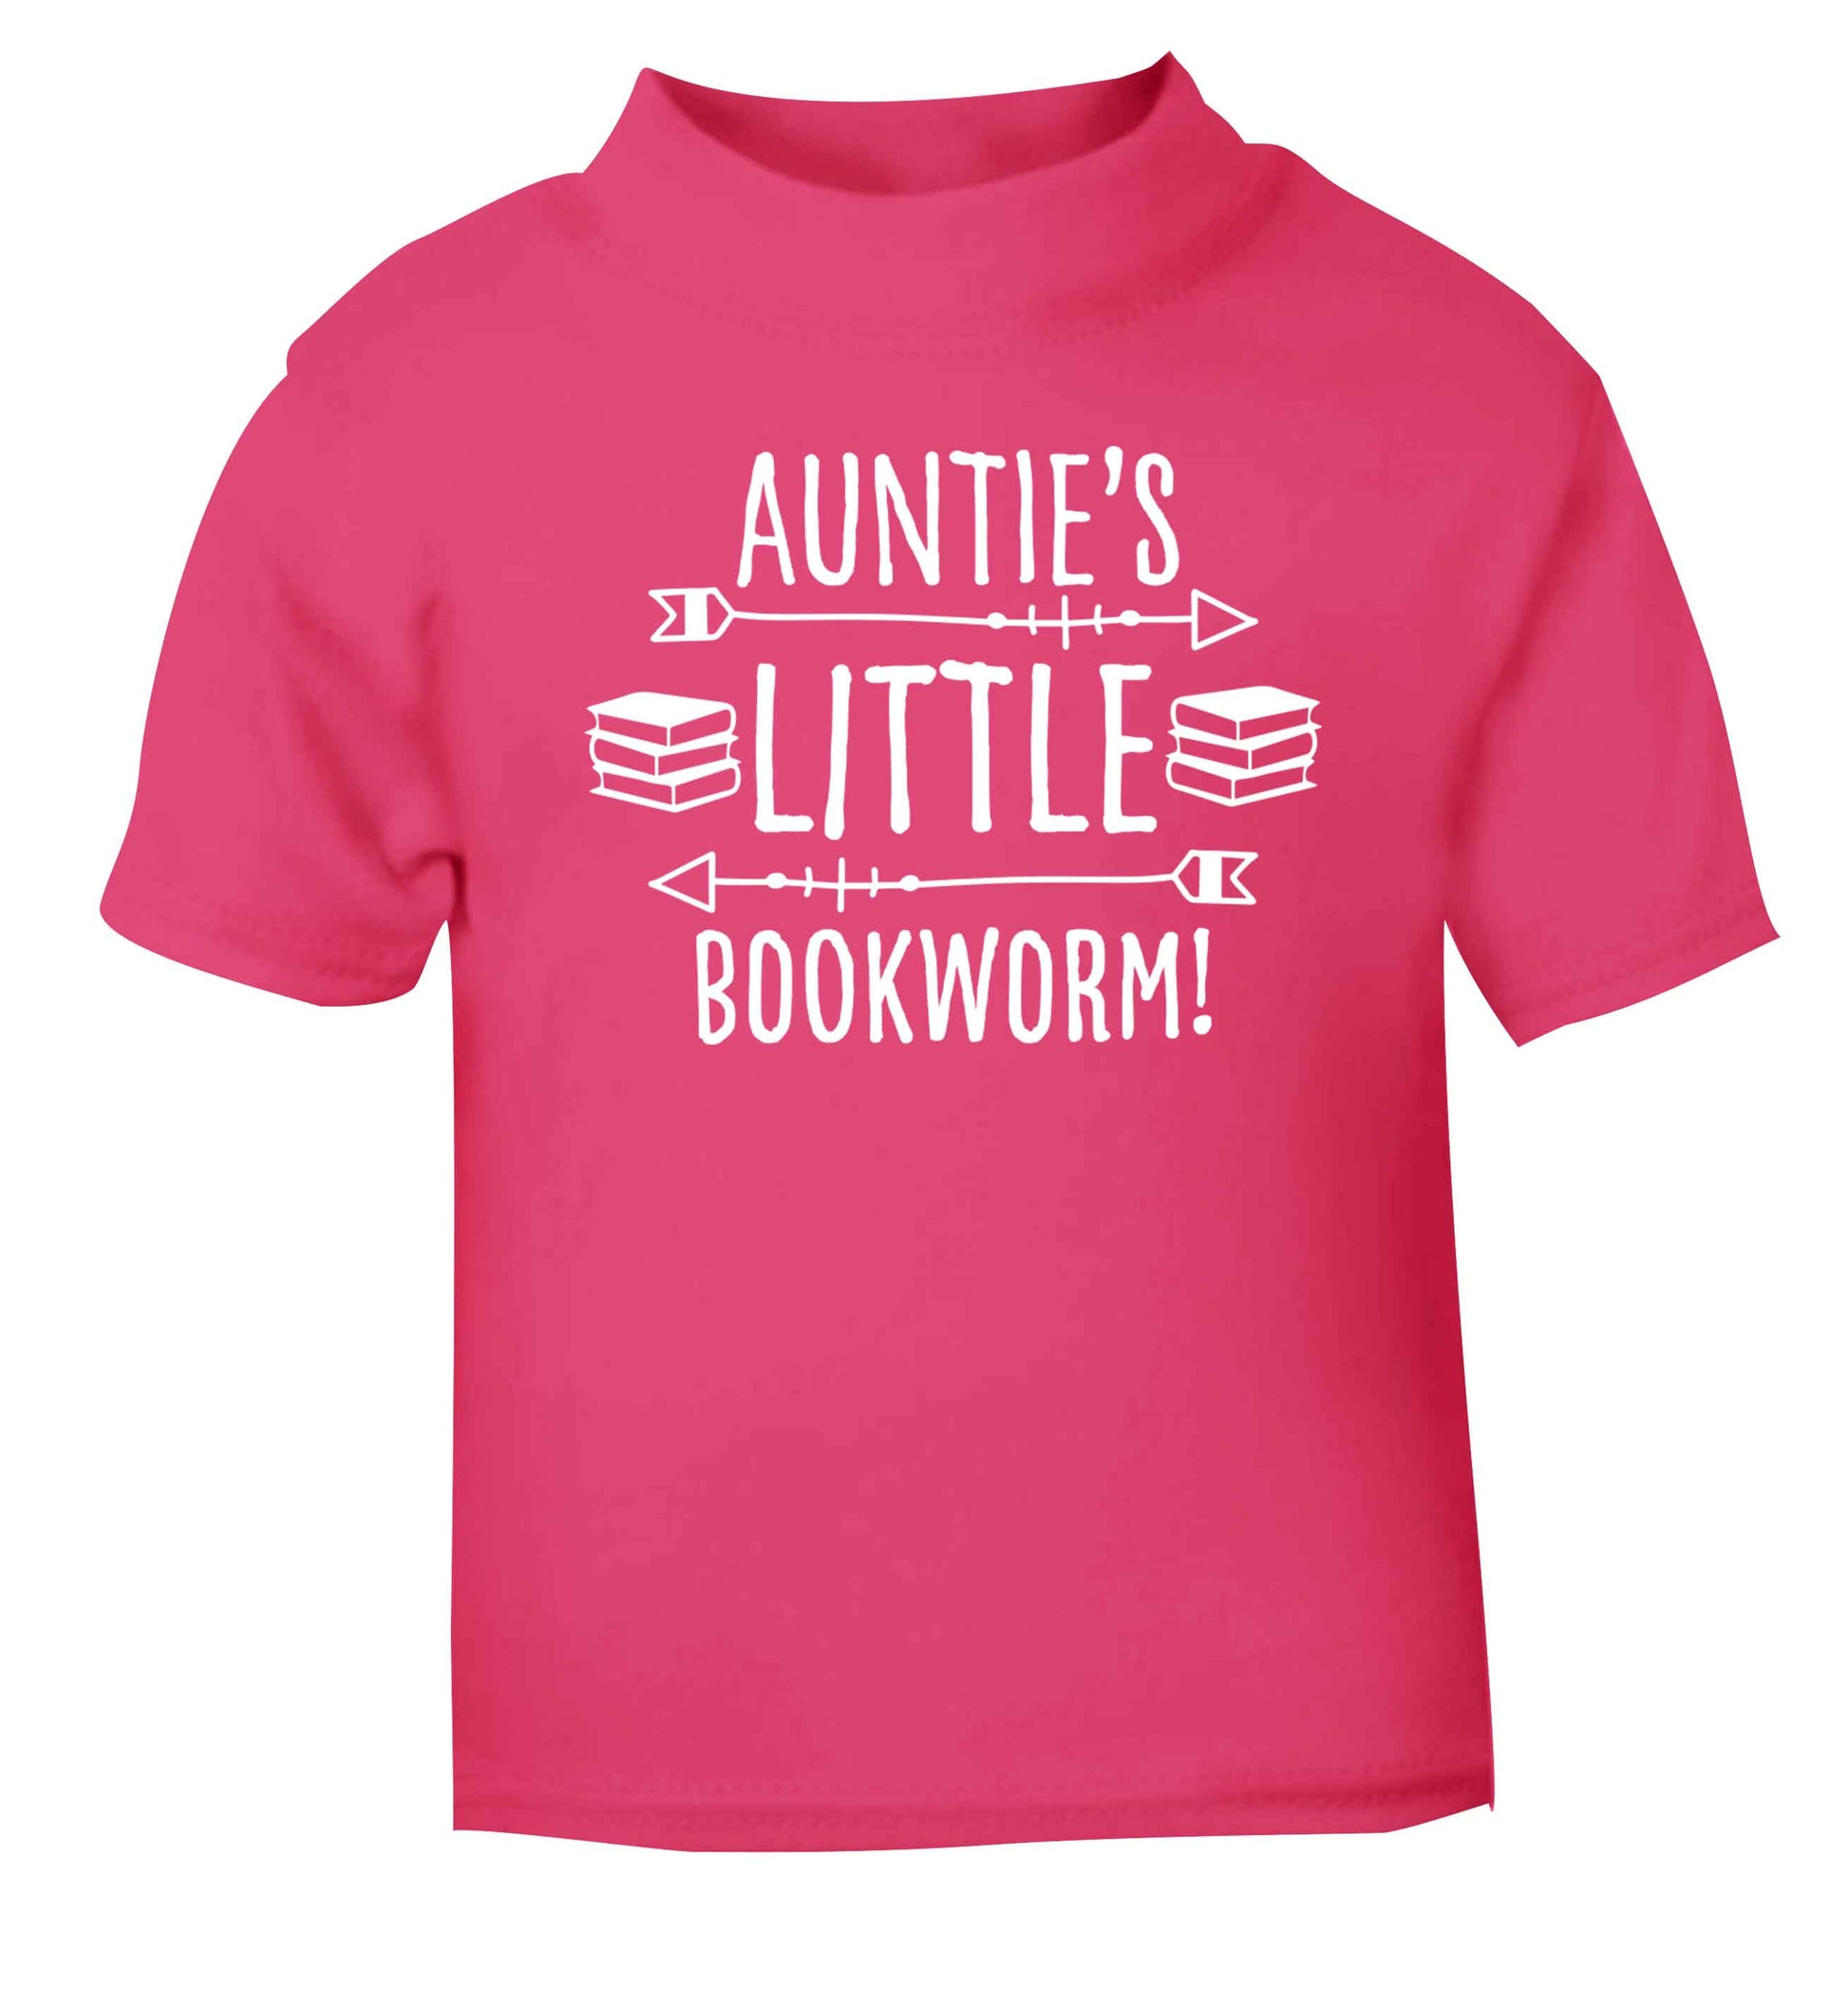 Auntie's little bookworm pink baby toddler Tshirt 2 Years